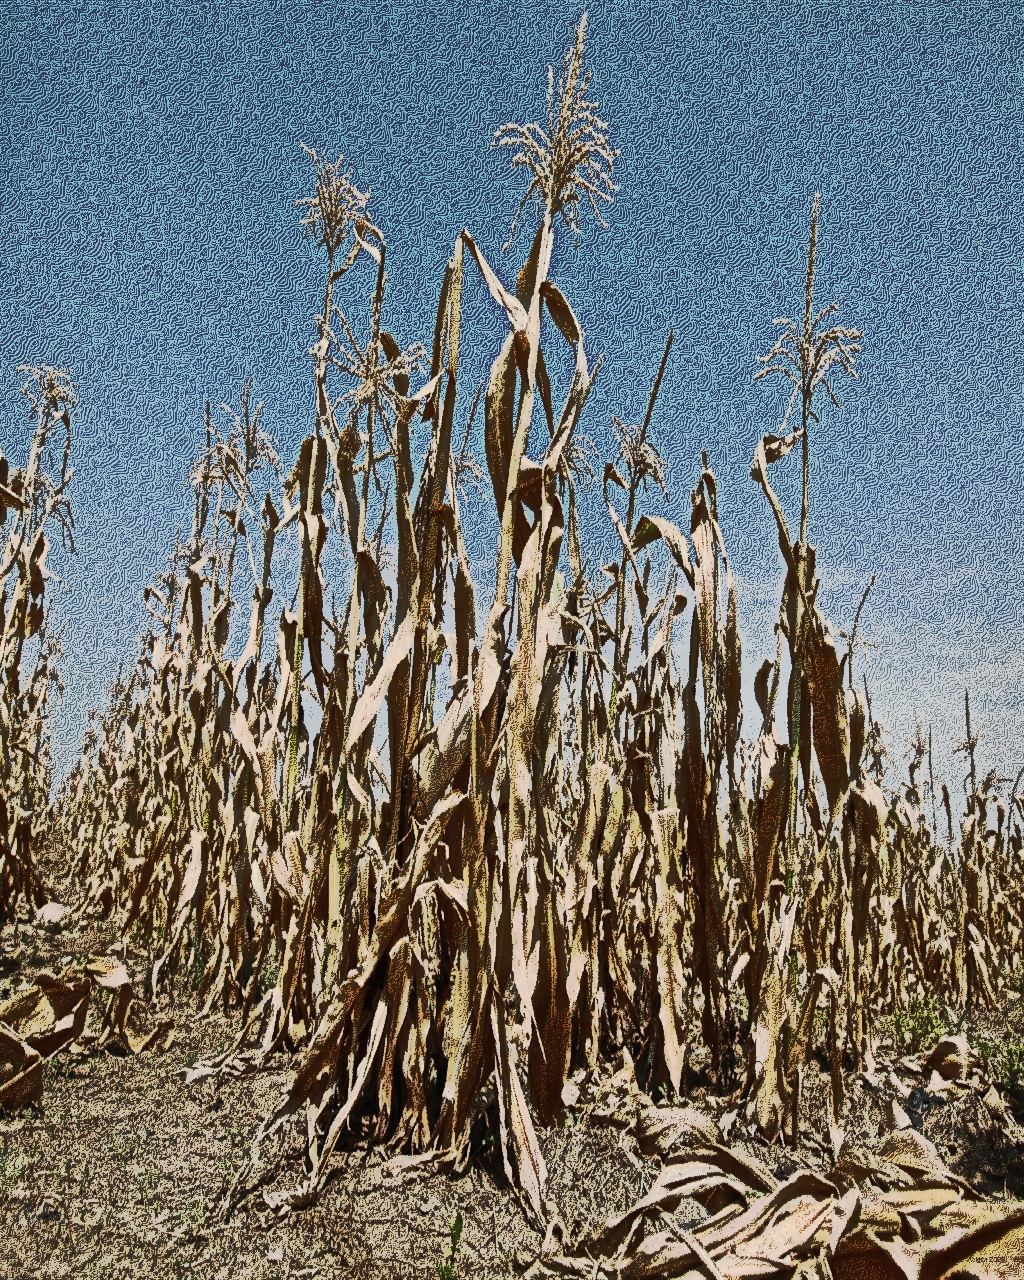 Drought stricken dried corn stalks in a field under a hazy blue sky.